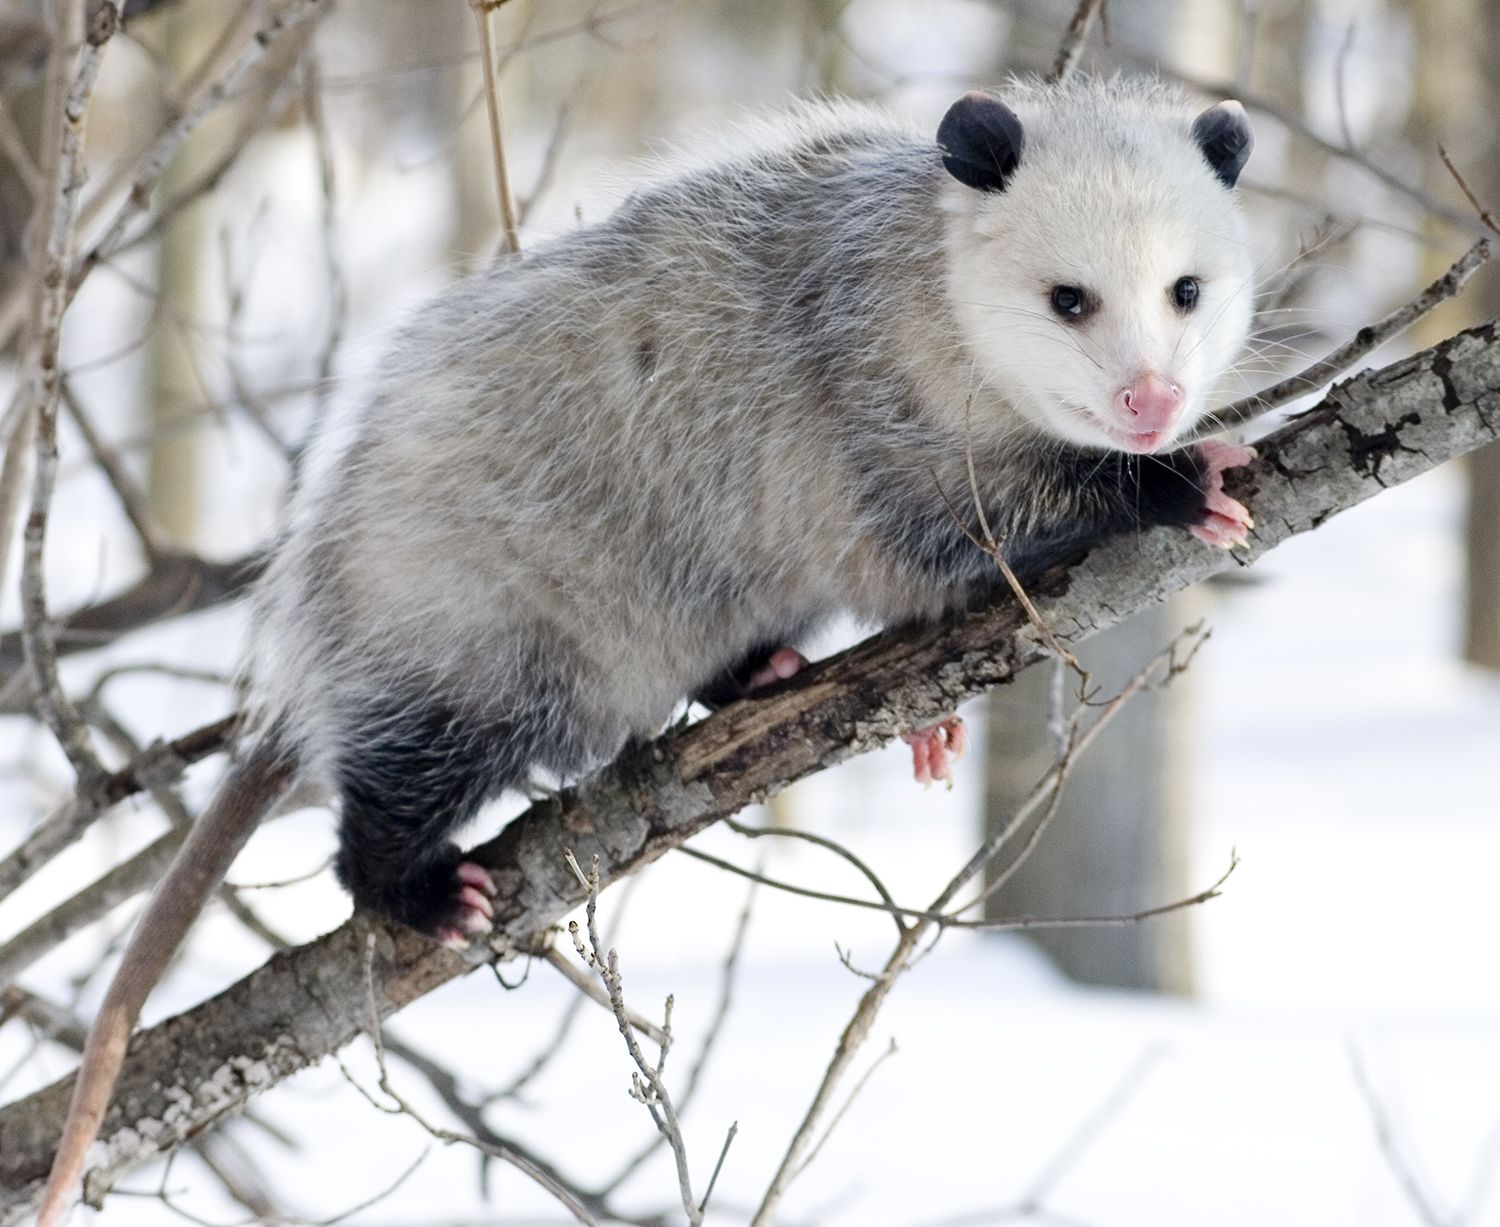 Animals World: asian animals of opossum photo gallery